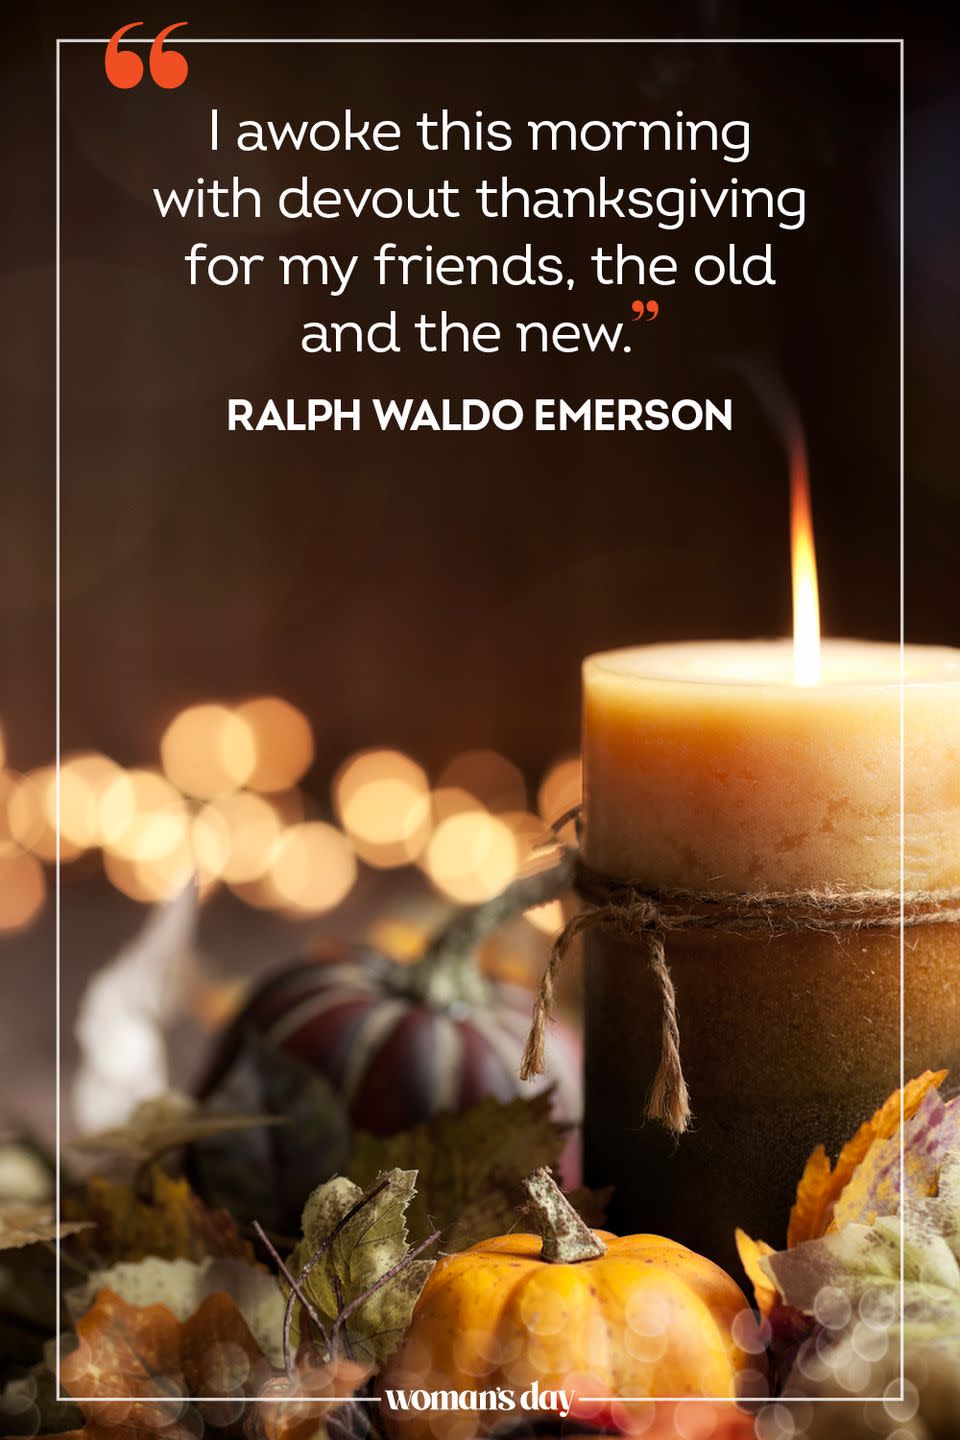 13) Ralph Waldo Emerson